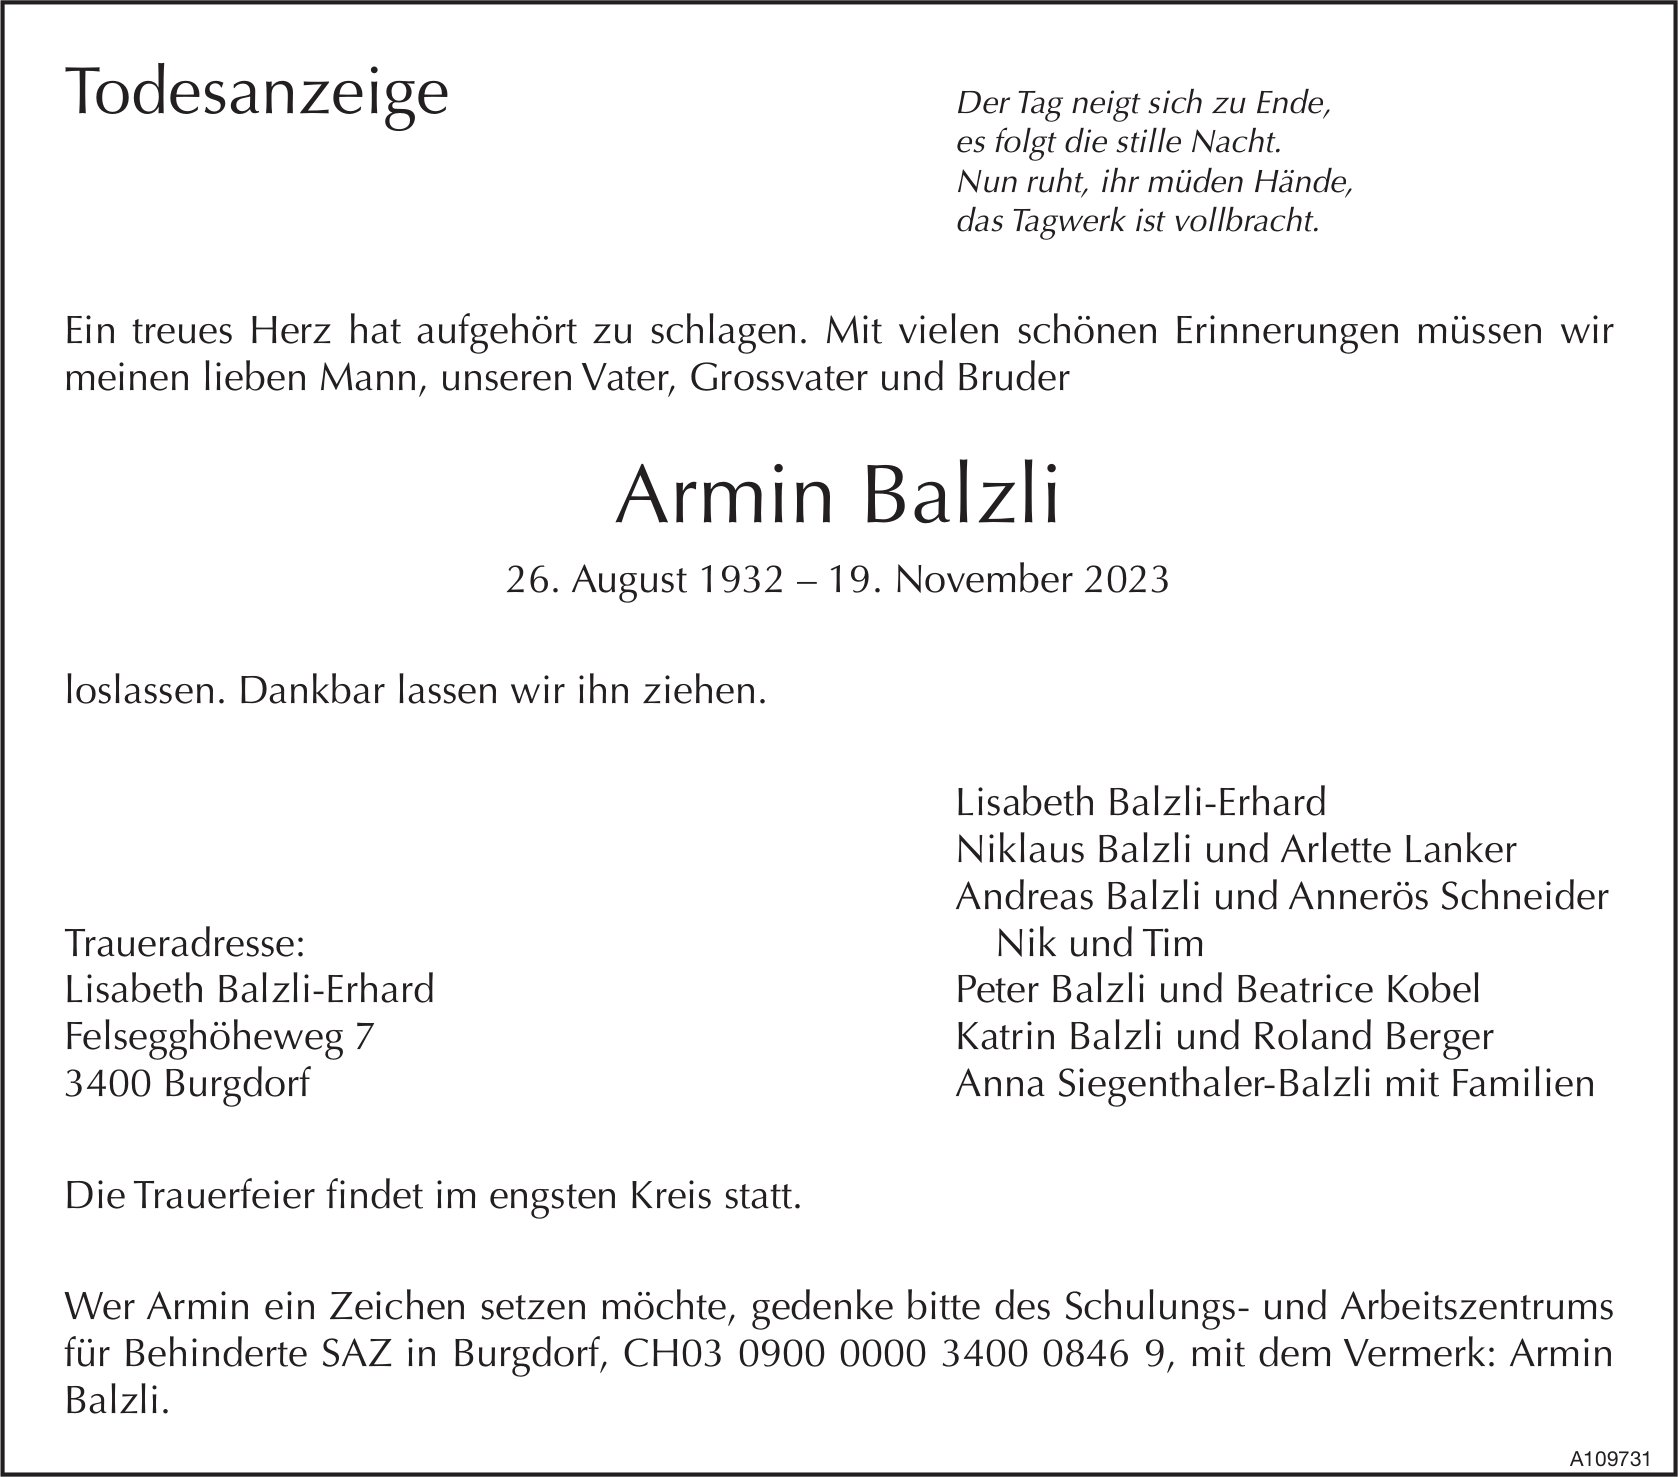 Armin Balzli, November 2023 / TA